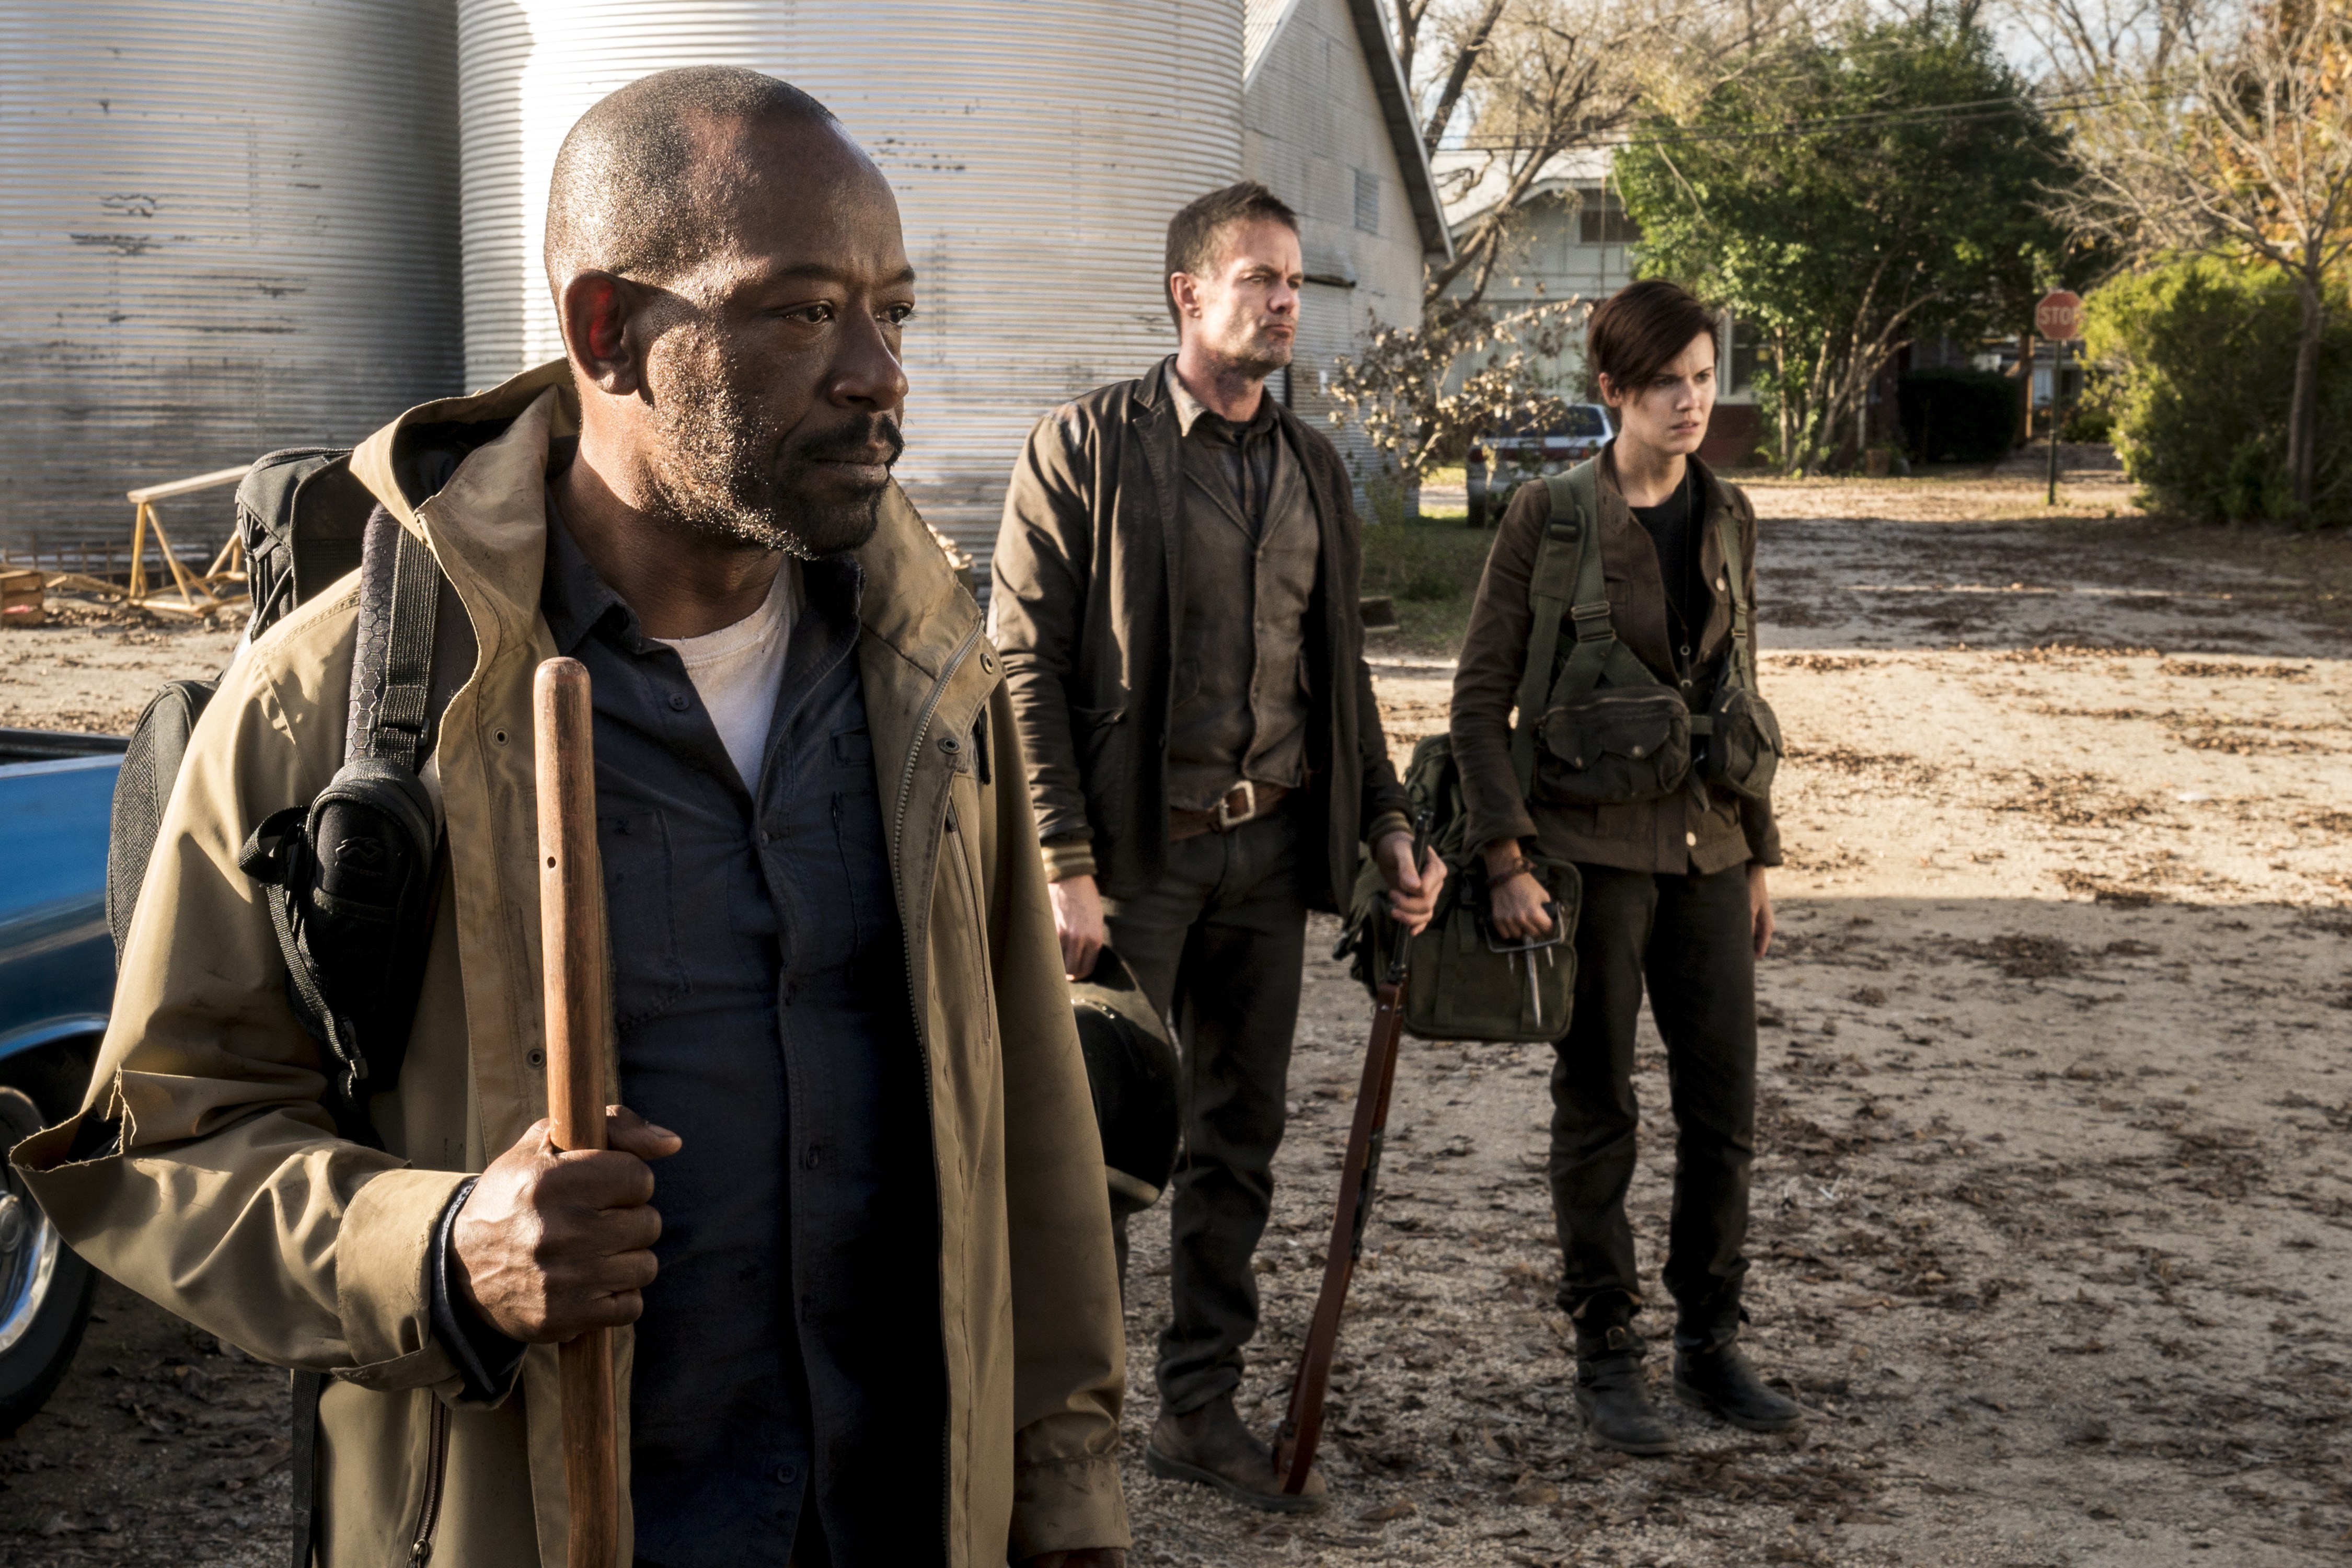 Lennie James Maggie Grace Garret Dillahunt Fear the Walking Dead Season 4 Episode 3